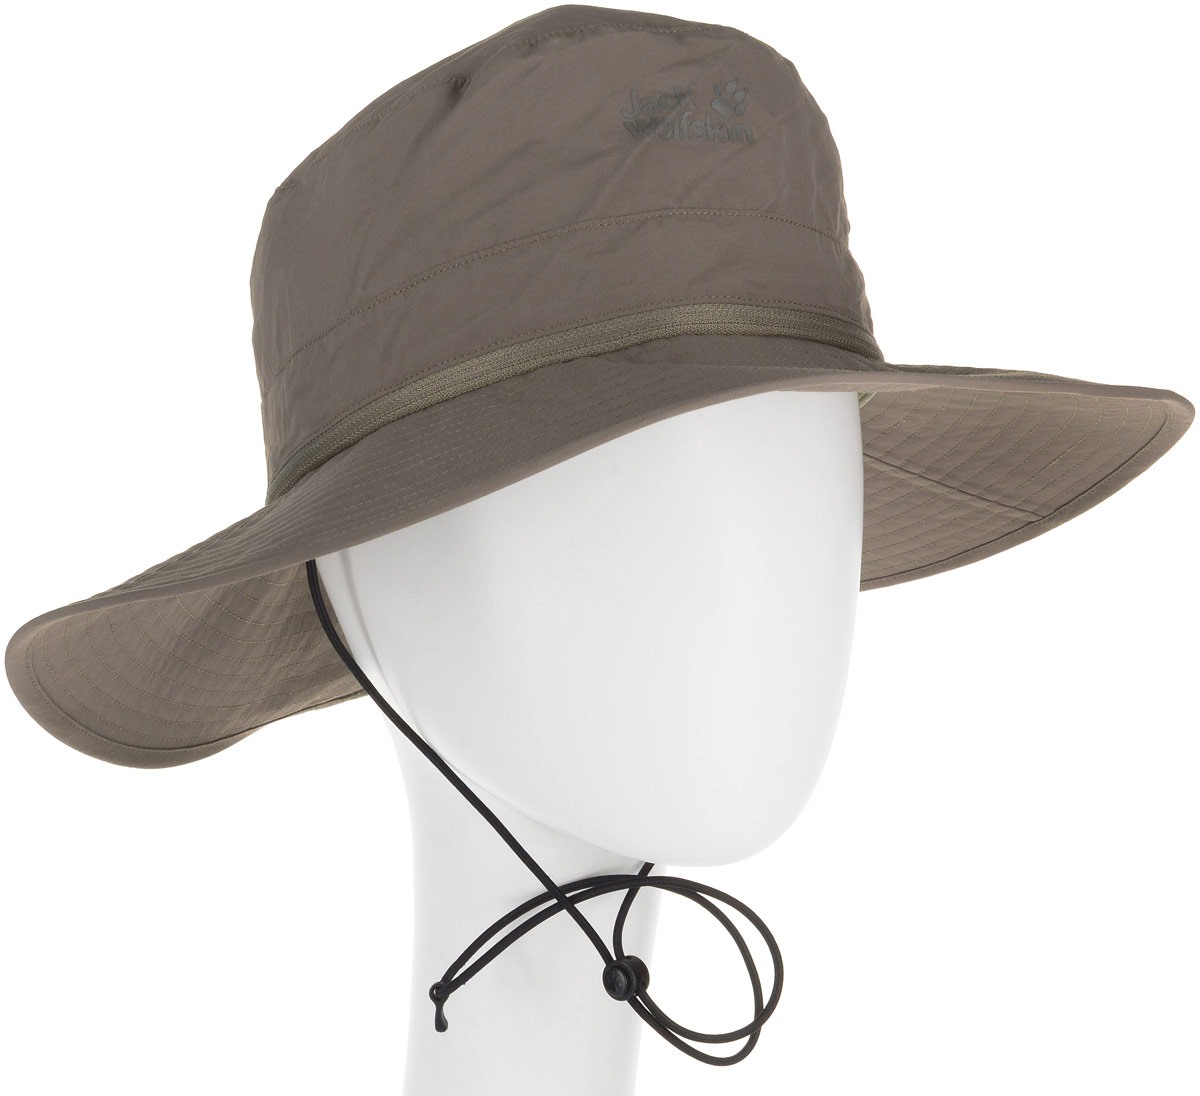 Панама Jack Wolfskin Supplex Mosquito Hat, цвет: коричневый. 1906751-5116. Размер L (57/60)